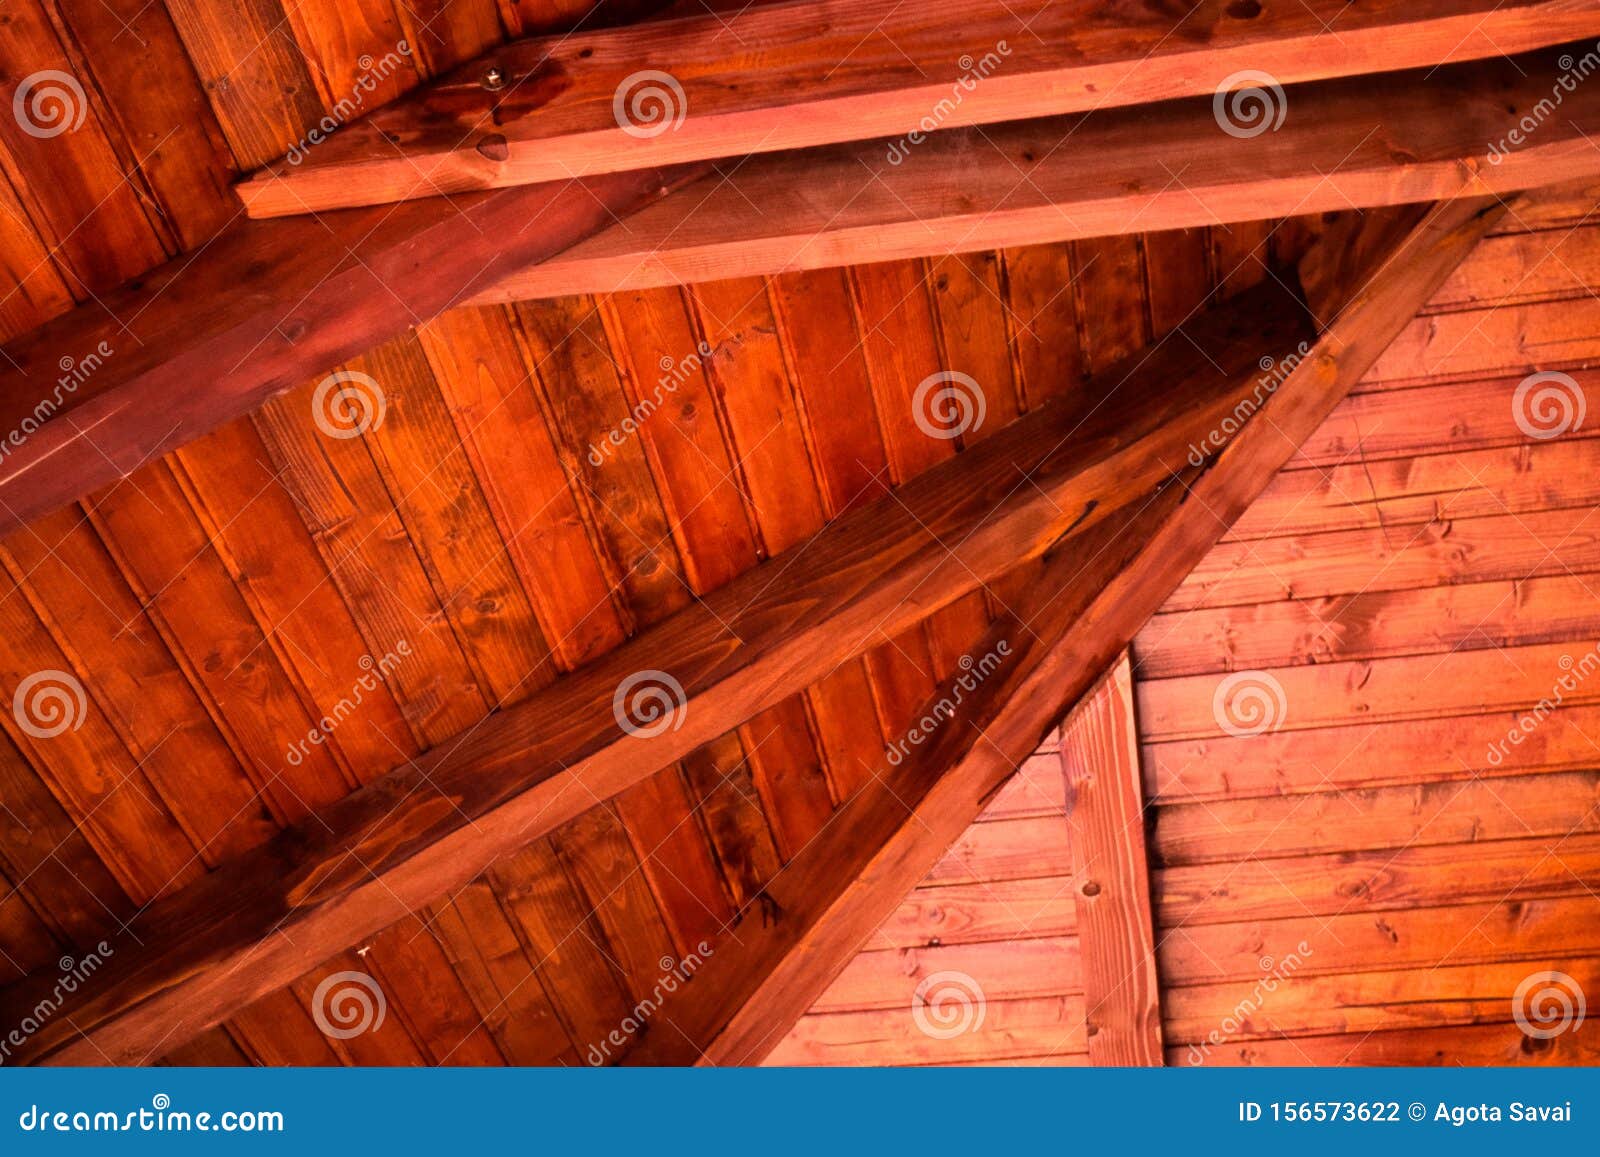 wooden roof living room